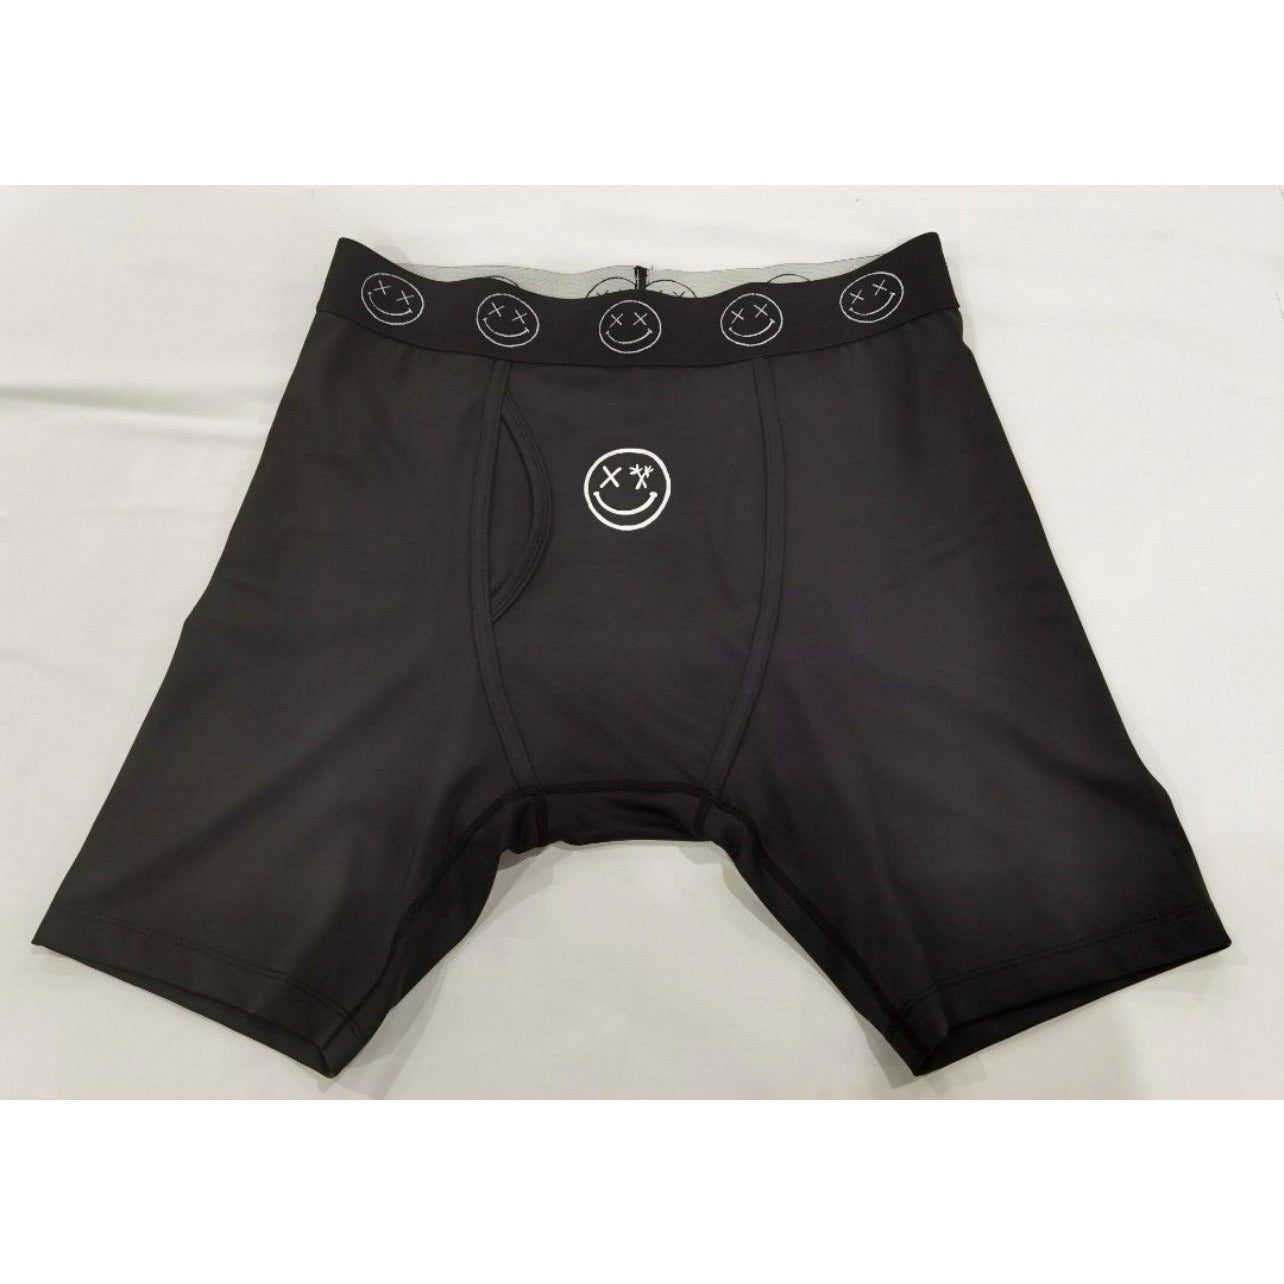 Salty Savage Men's “Happy Thoughts” Performance Boxer Briefs Underwear